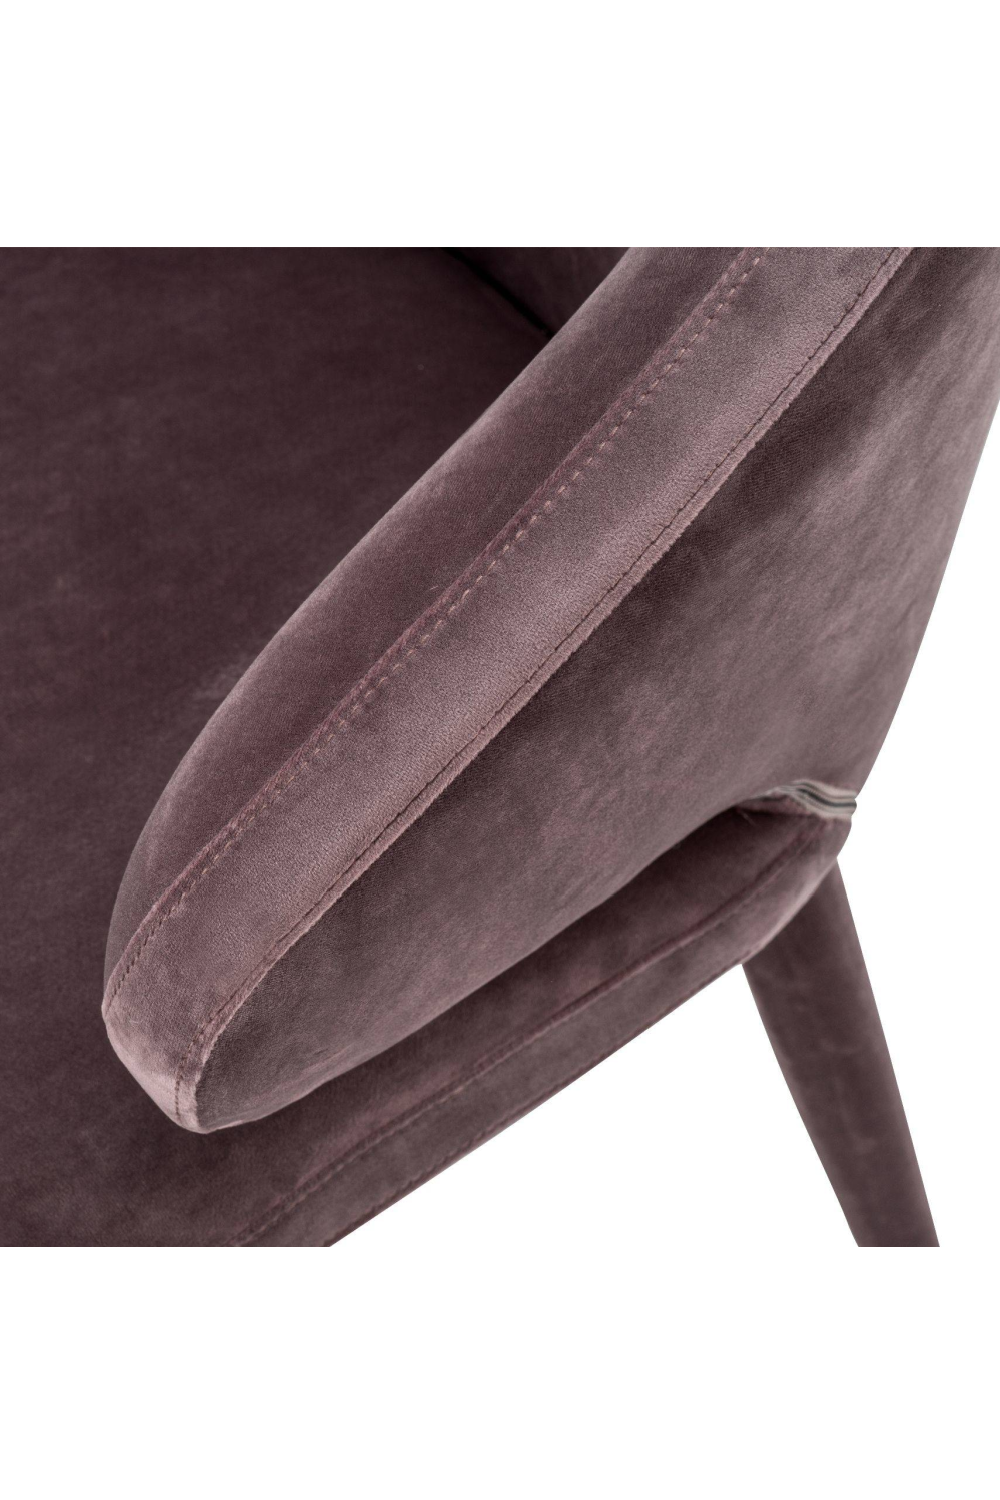 Purple Dining Chair | Eichholtz Cardinale | Oroa.com